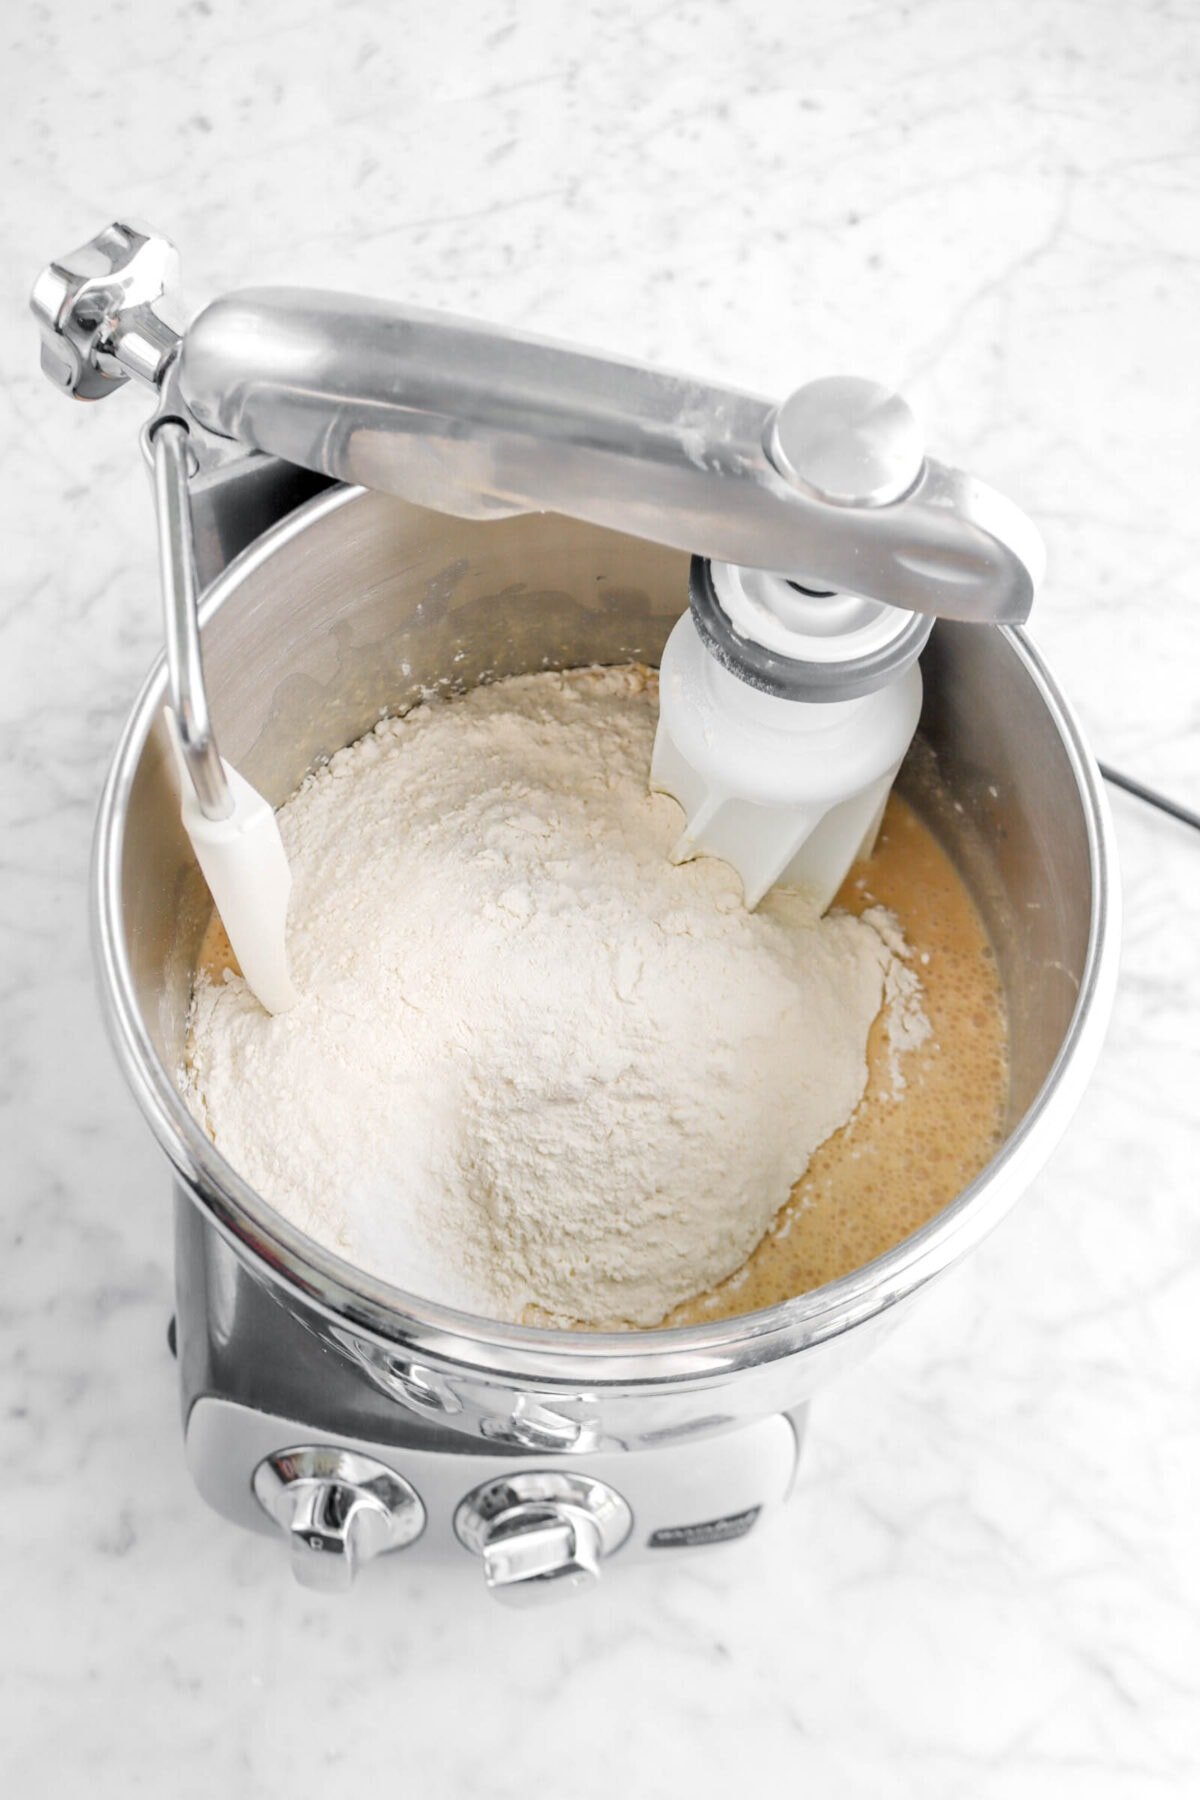 flour added to sourdough mixture